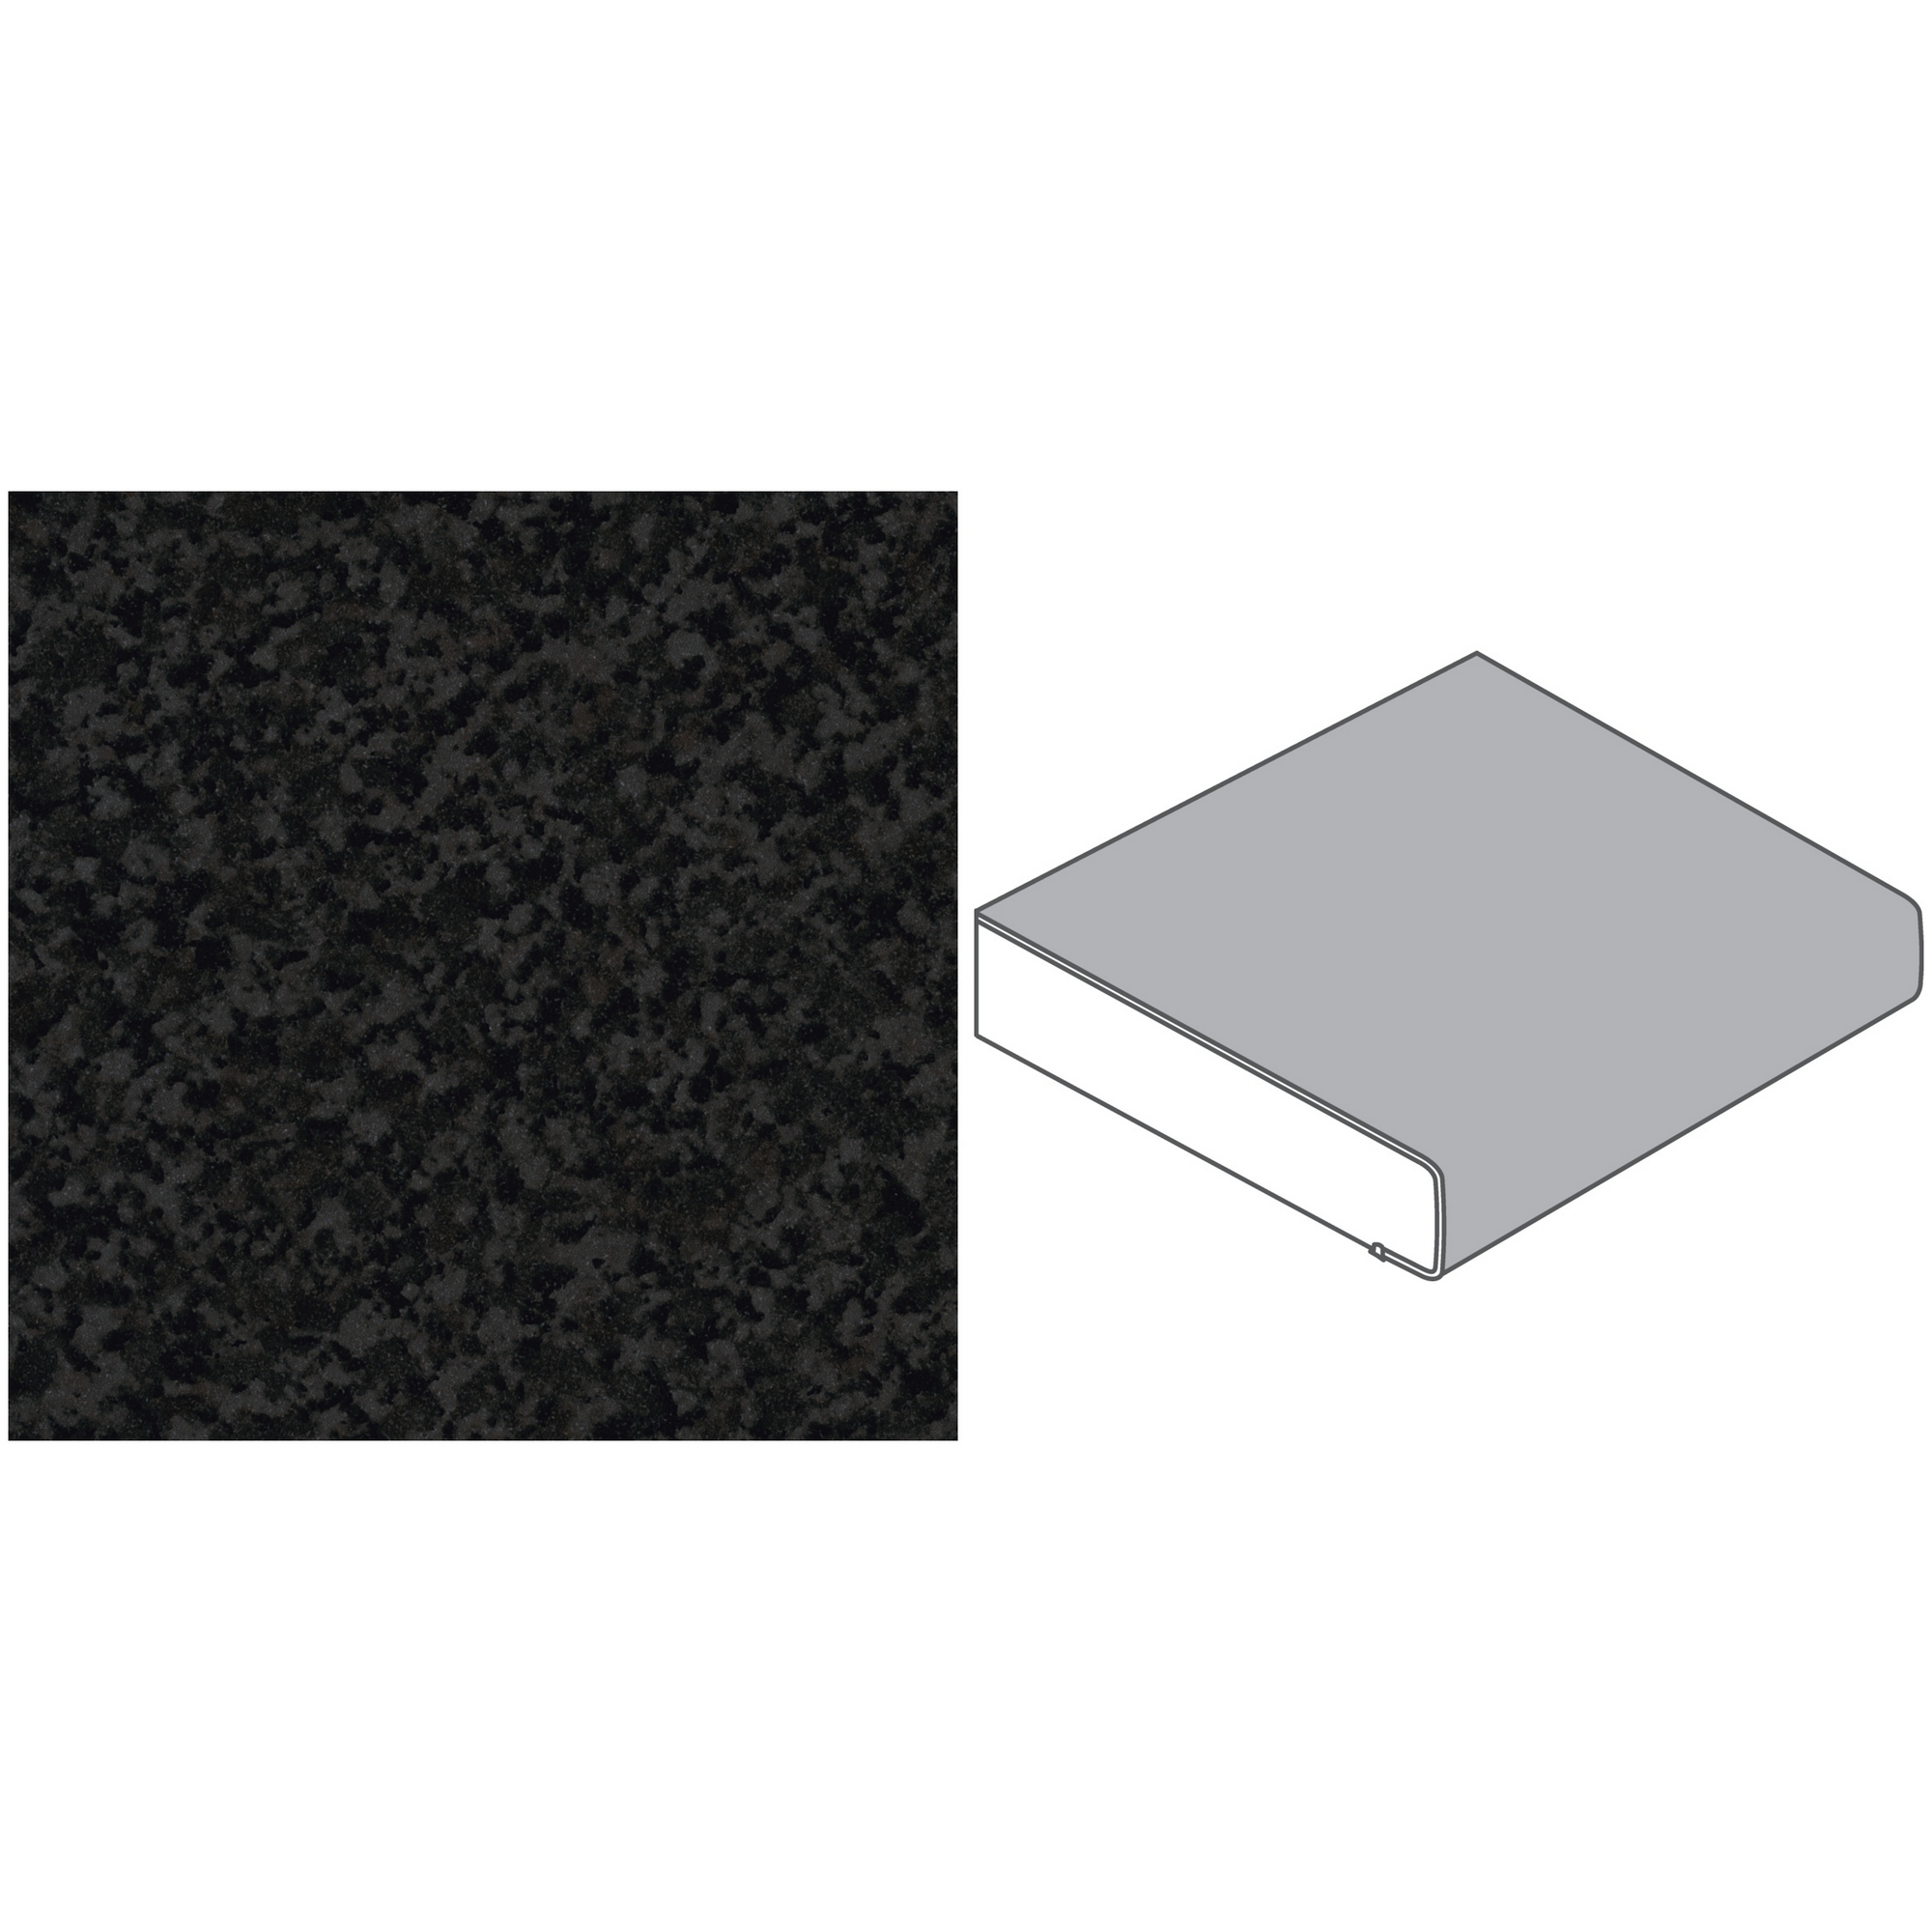 Küchenarbeitsplatte 'GT117 C' 2960 x 600 x 39 mm granit anthrazit + product picture